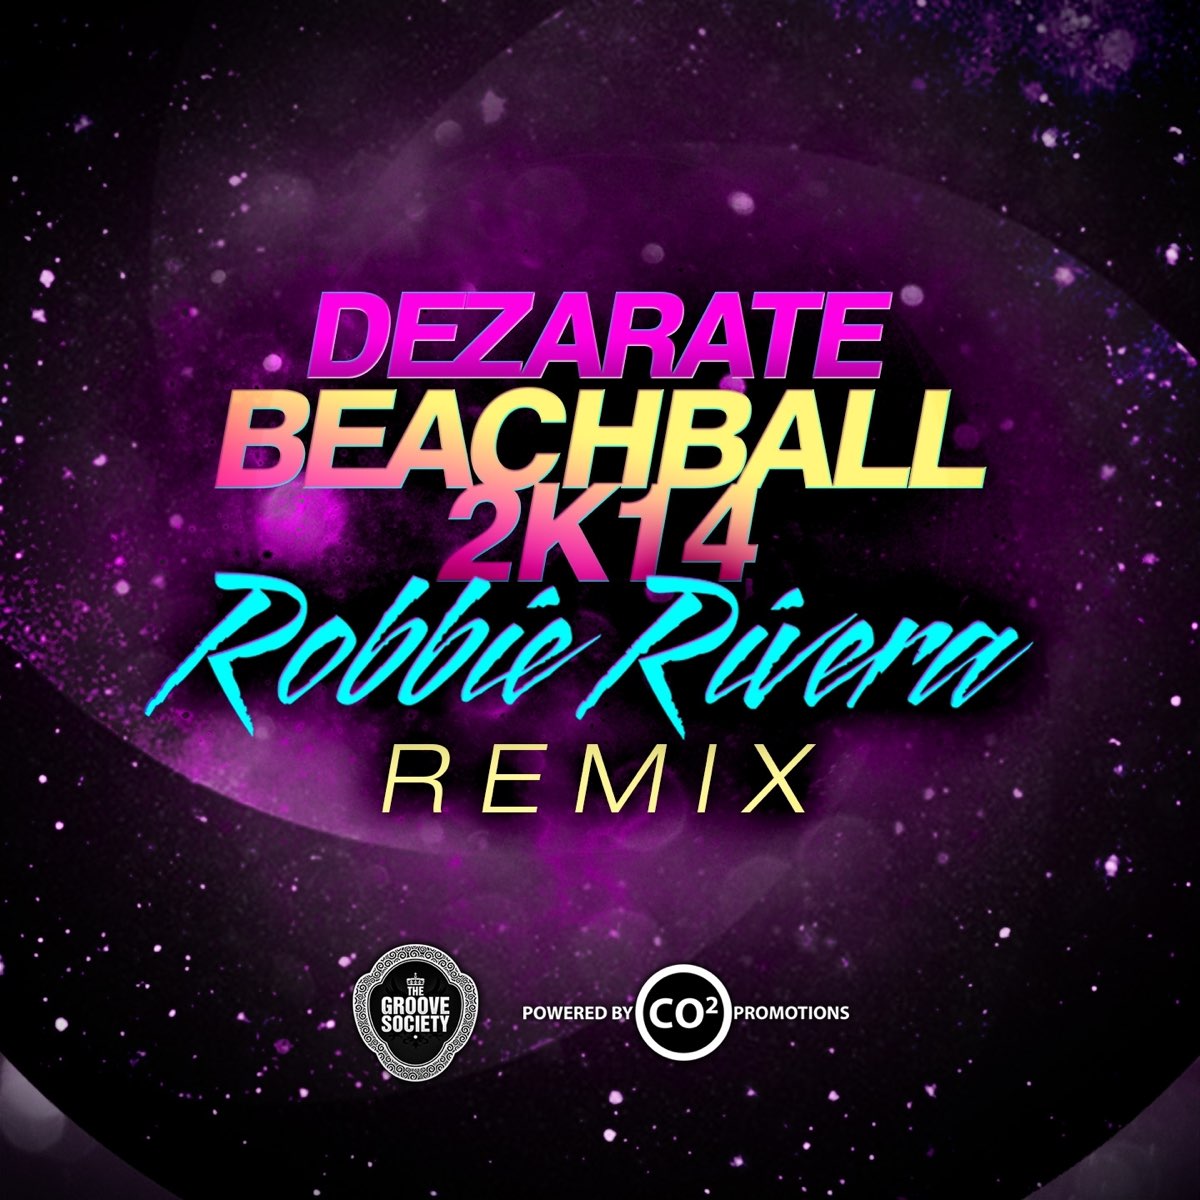 BeachBall 2K14 (Robbie Rivera Remix) - Single by Dezarate.